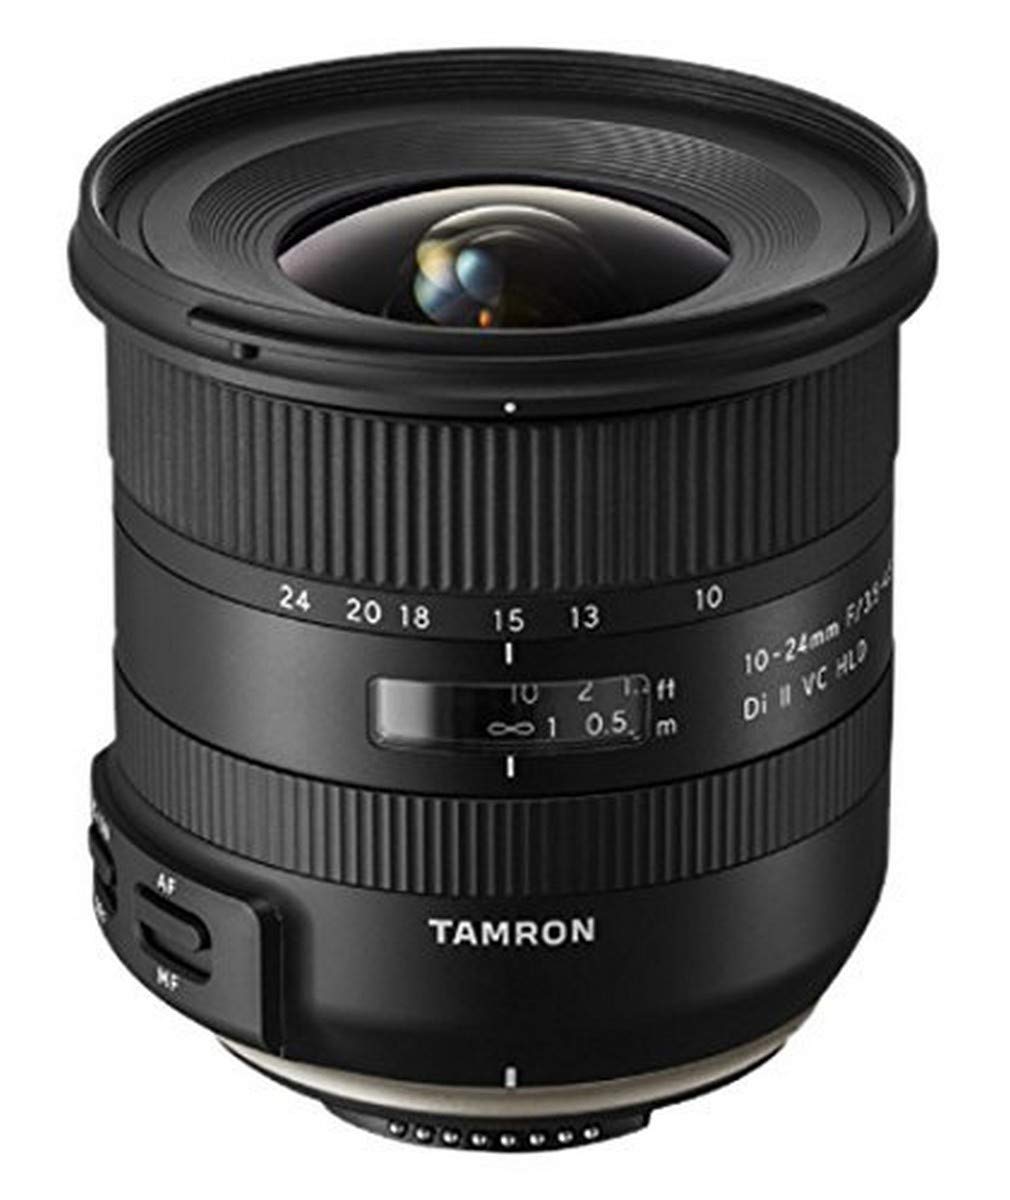 Open Box, Unused Tamron 10-24mm F/3.5-4.5 Di-II VC HLD Lens for Nikon